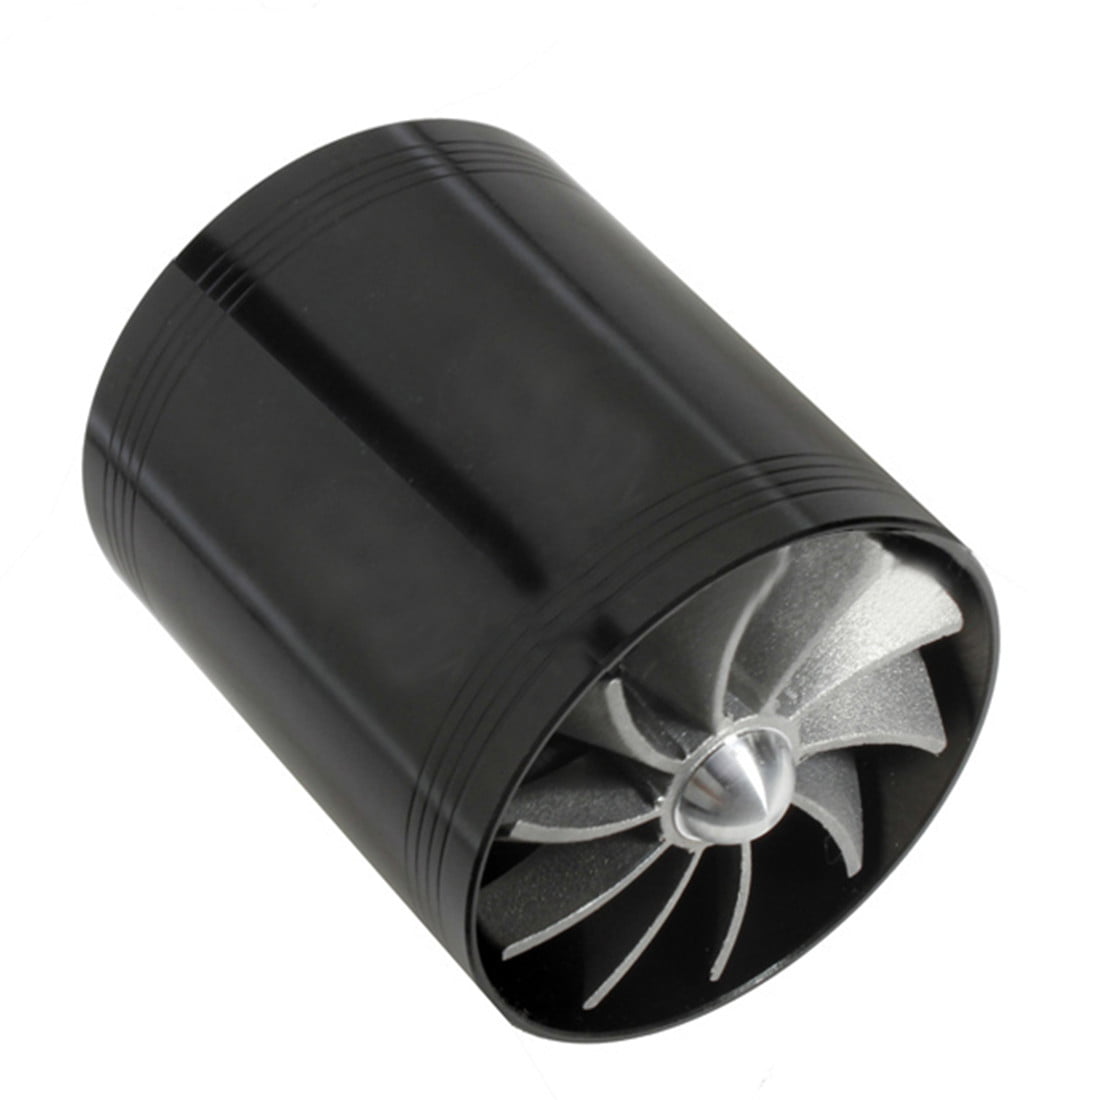 Black Supercharger Single Turbonator Air Intake Fuel Saver Turbo Fan Universal Car